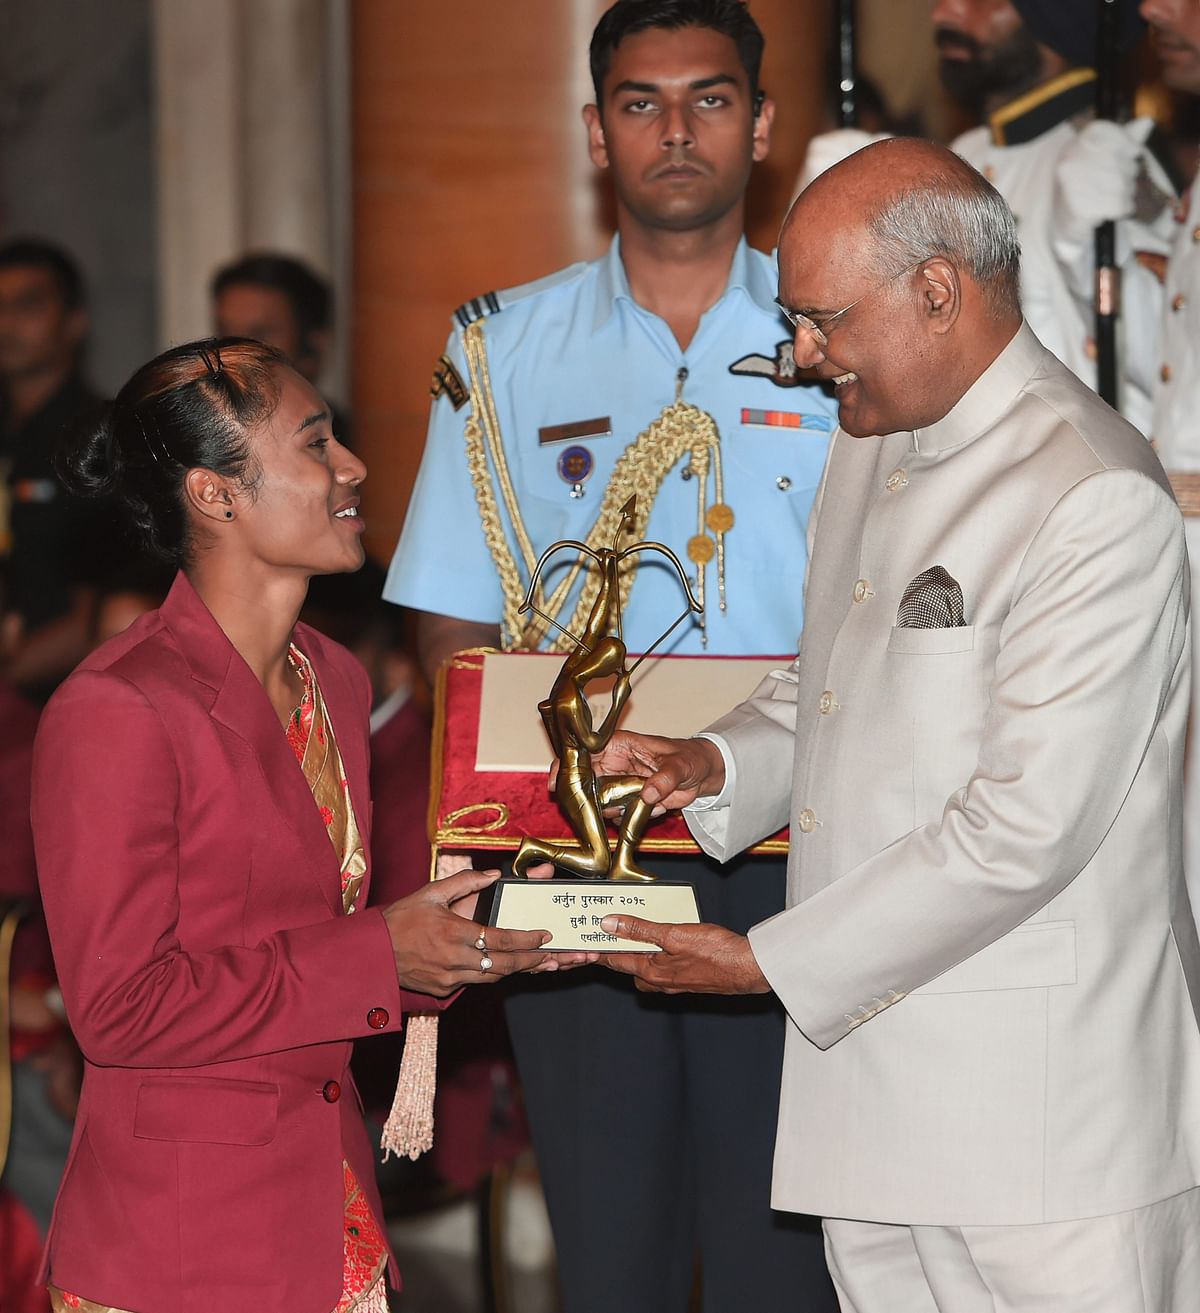 Virat Kohli and weightlifter Saikhom Mirabai Chanu were conferred  the Rajiv Gandhi Khel Ratna award.